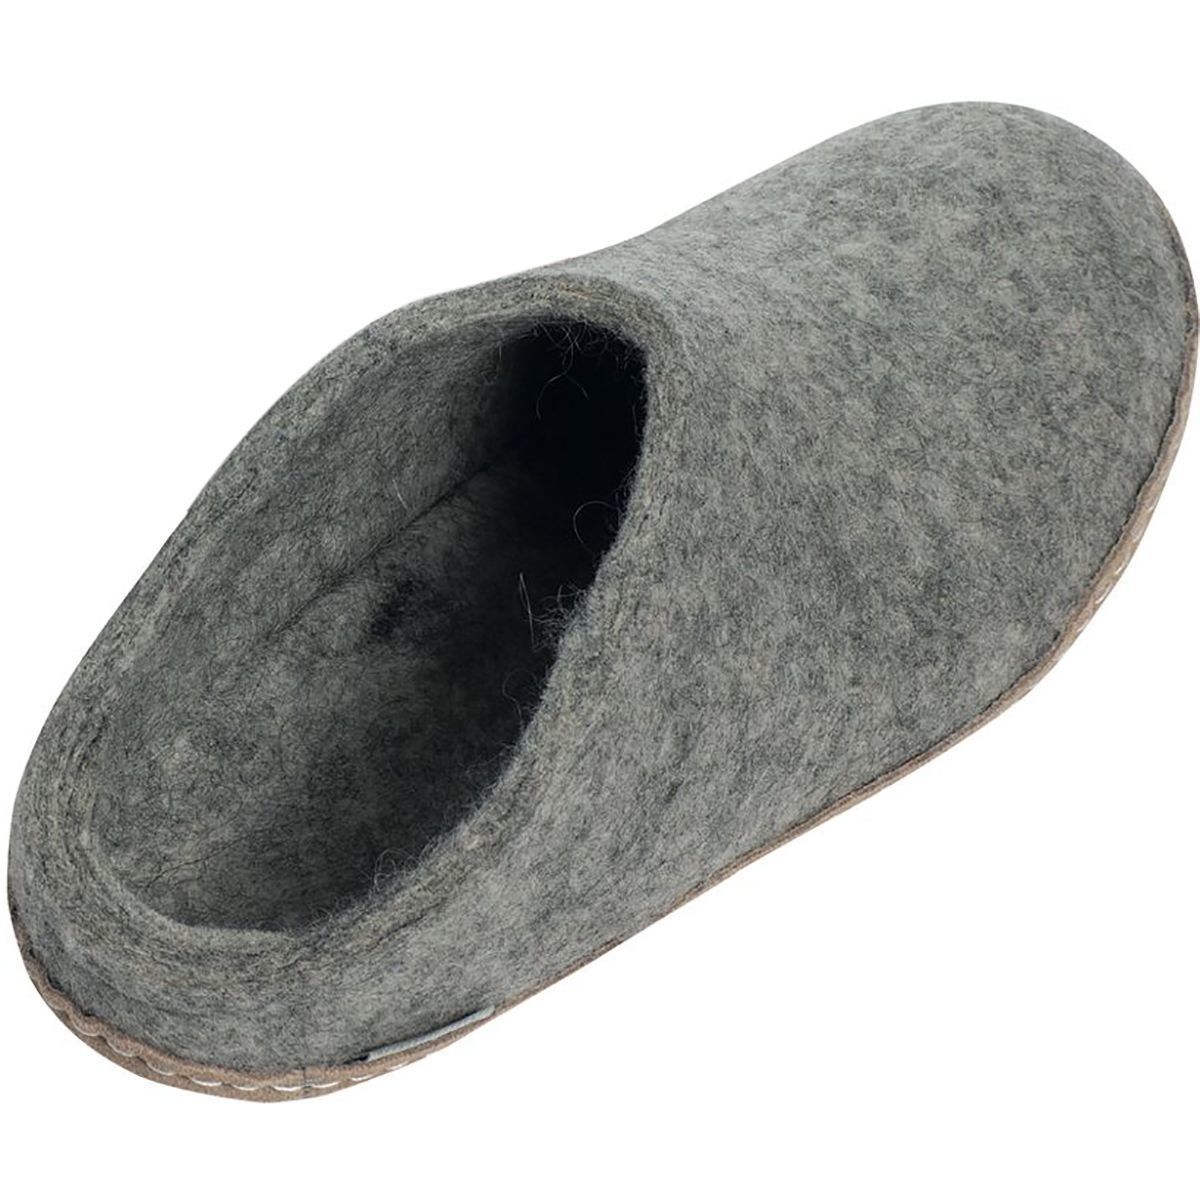 glerups slippers sale